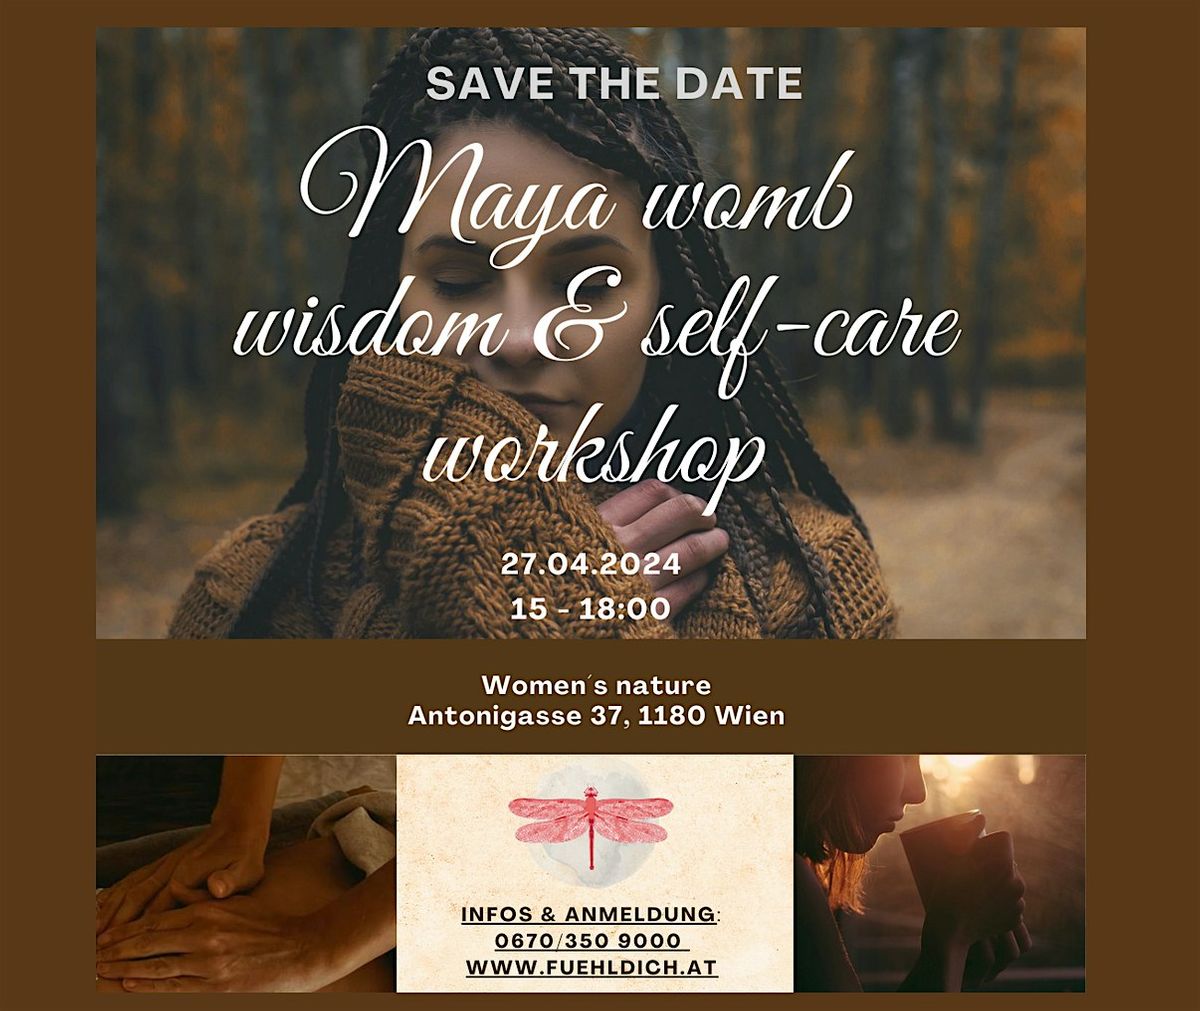 Maya womb wisdom und self-care workshop